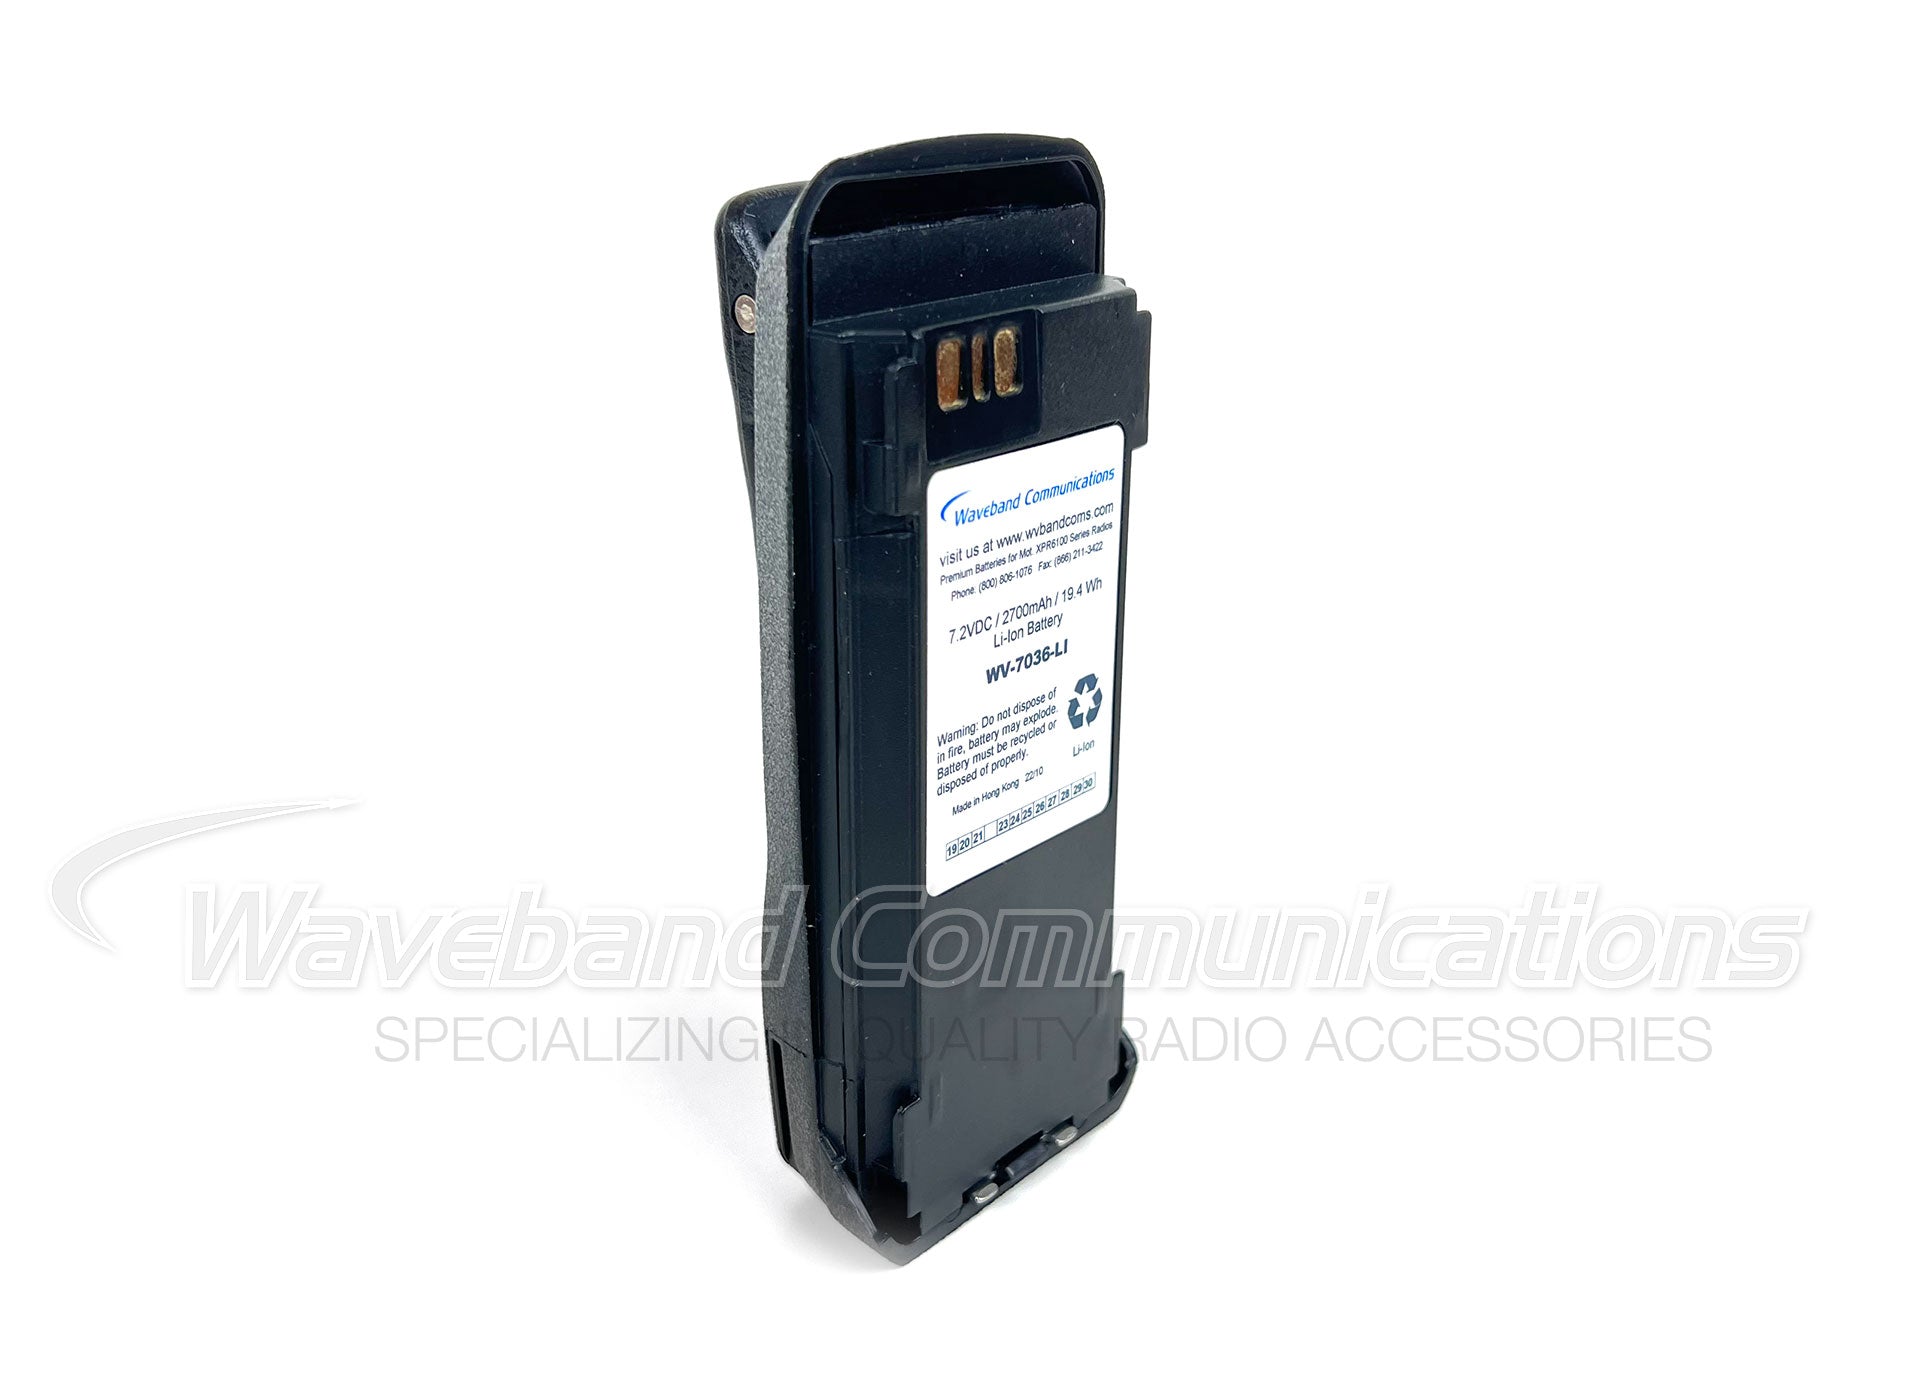 Bateria de alta capacidade para Motorola XPR6100 / XPR6300 / XPR6350 / XPR6380 / XPR6500 / XPR6500 / XPR6550 / XPR6580 / Mototrbo Series Parte # WV-7036-LI